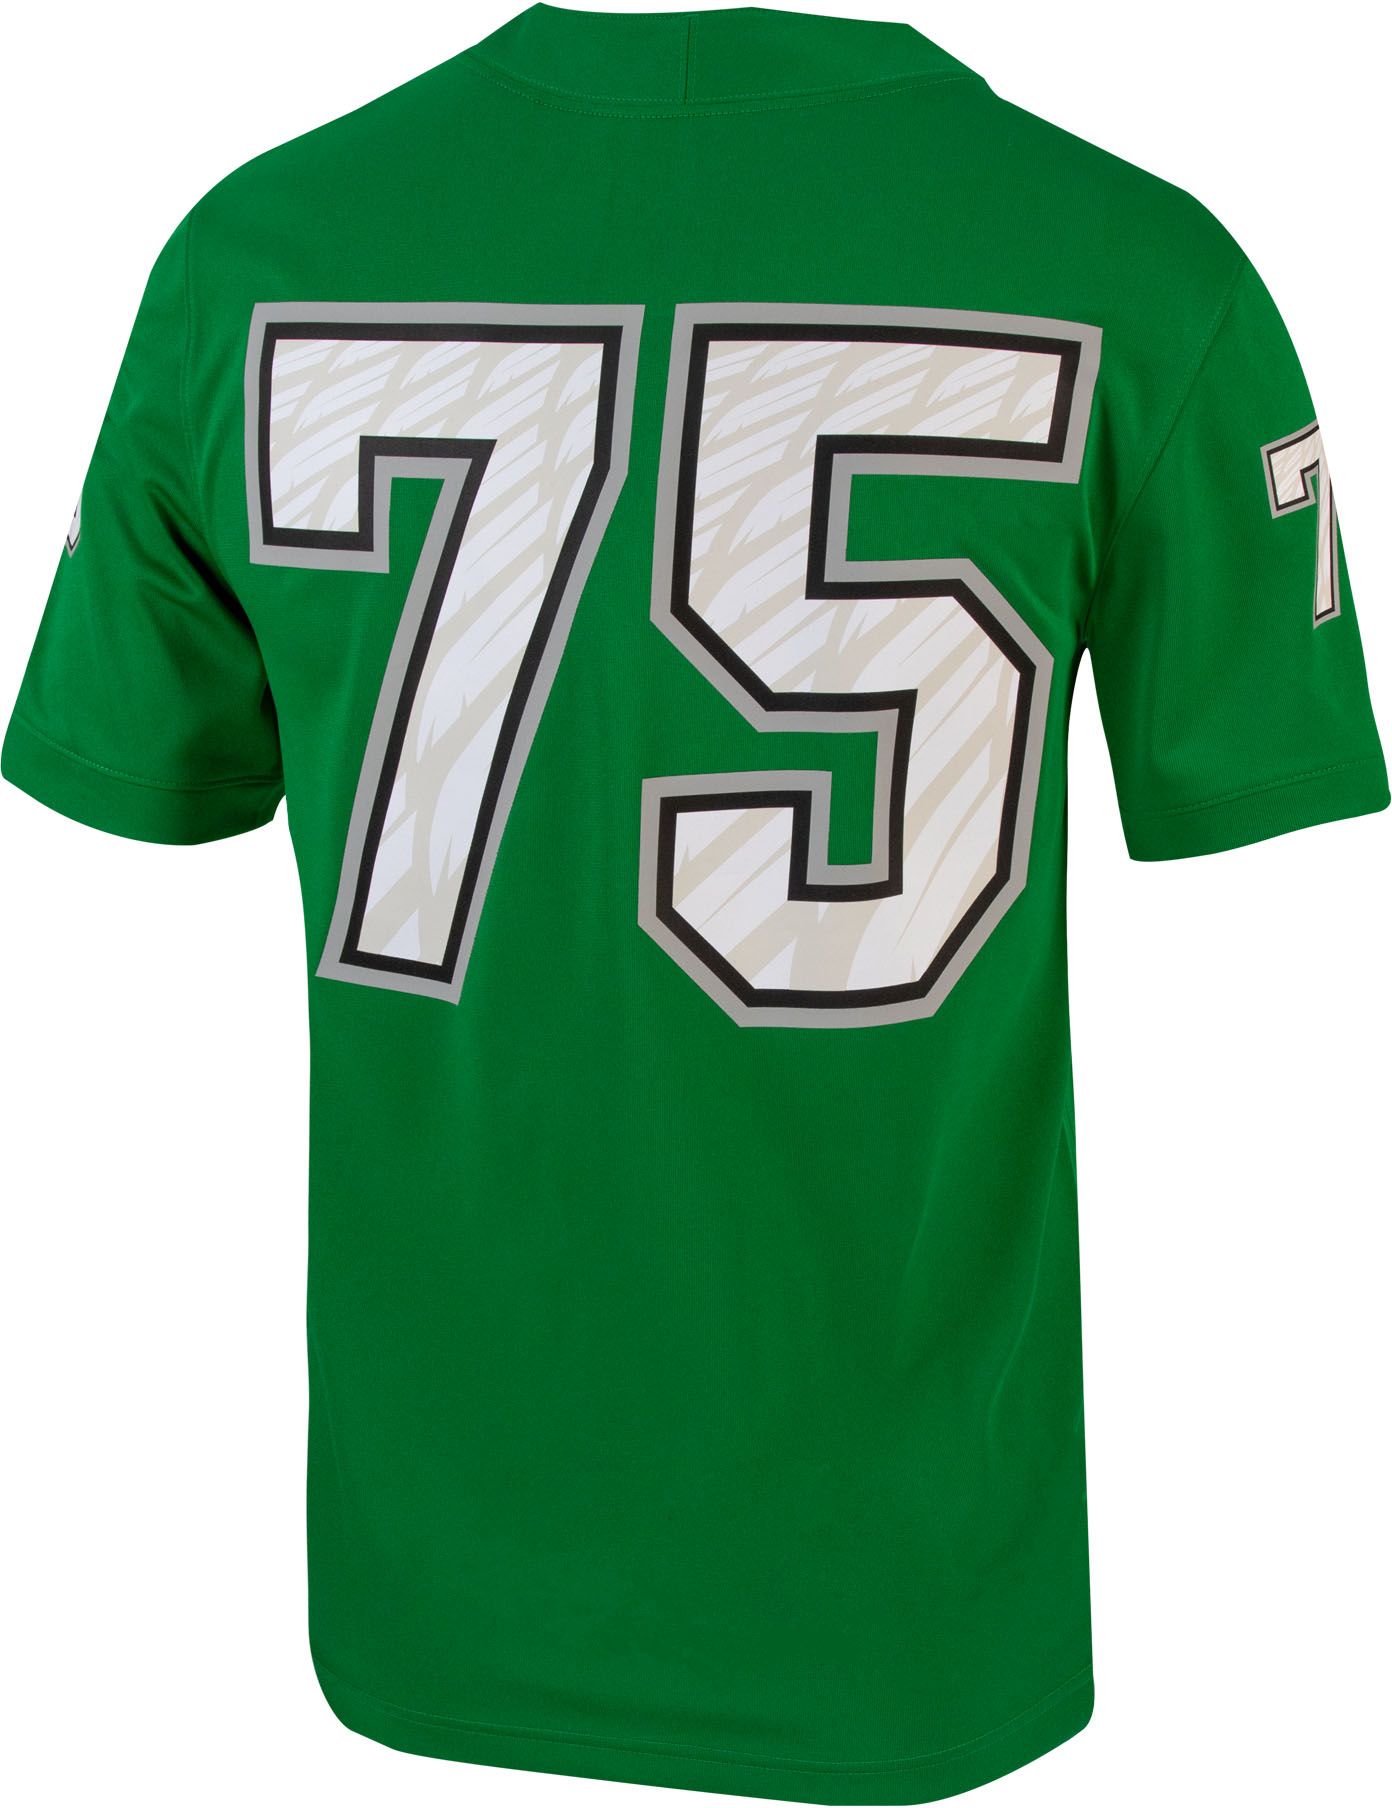 Mean Green soccer jersey